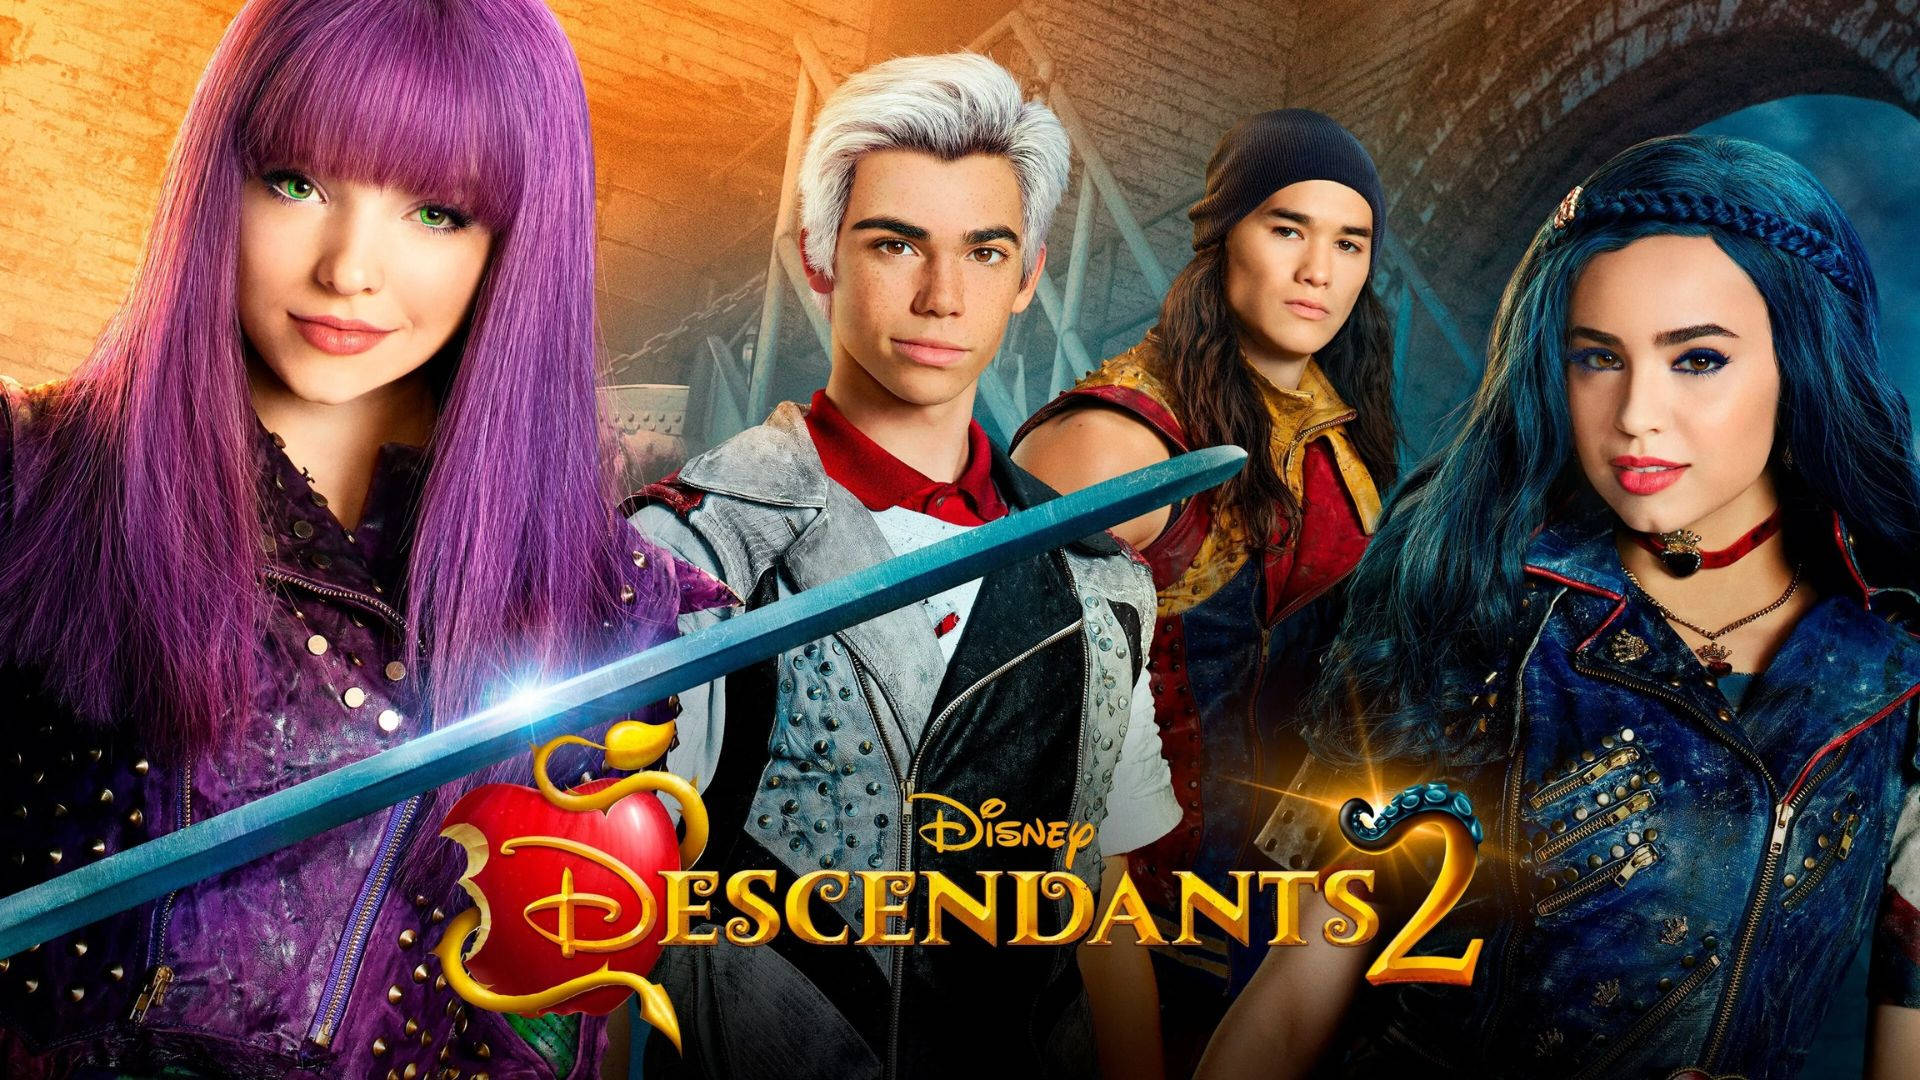 Descendants 2 Cast Cover Poster Background